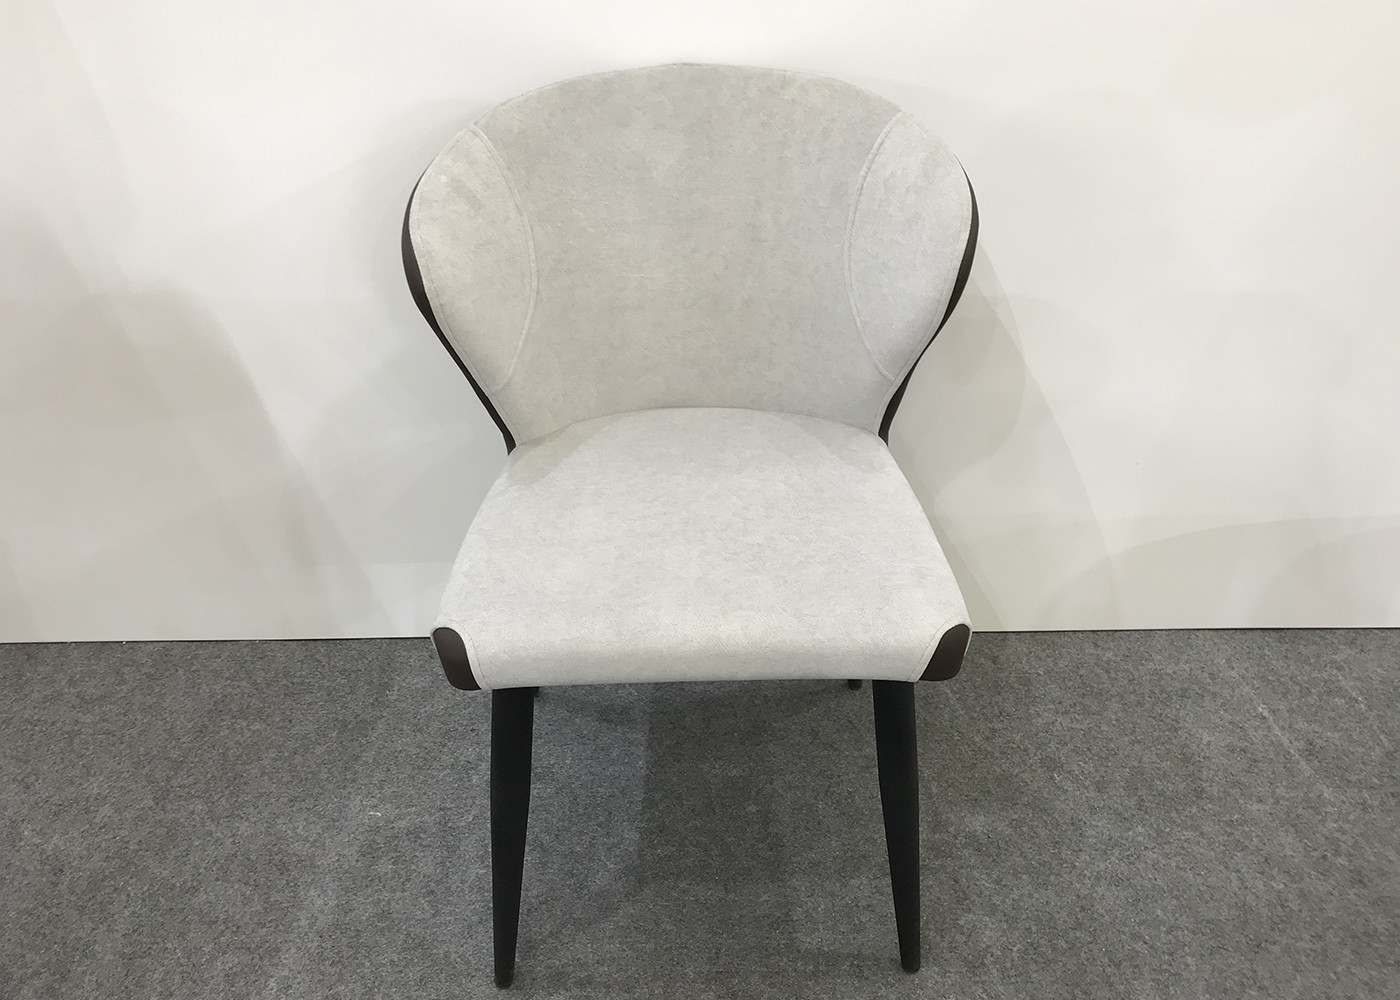 China High Density Sponge Cushion Backrest Ergonomic Dining Room Chairs factory